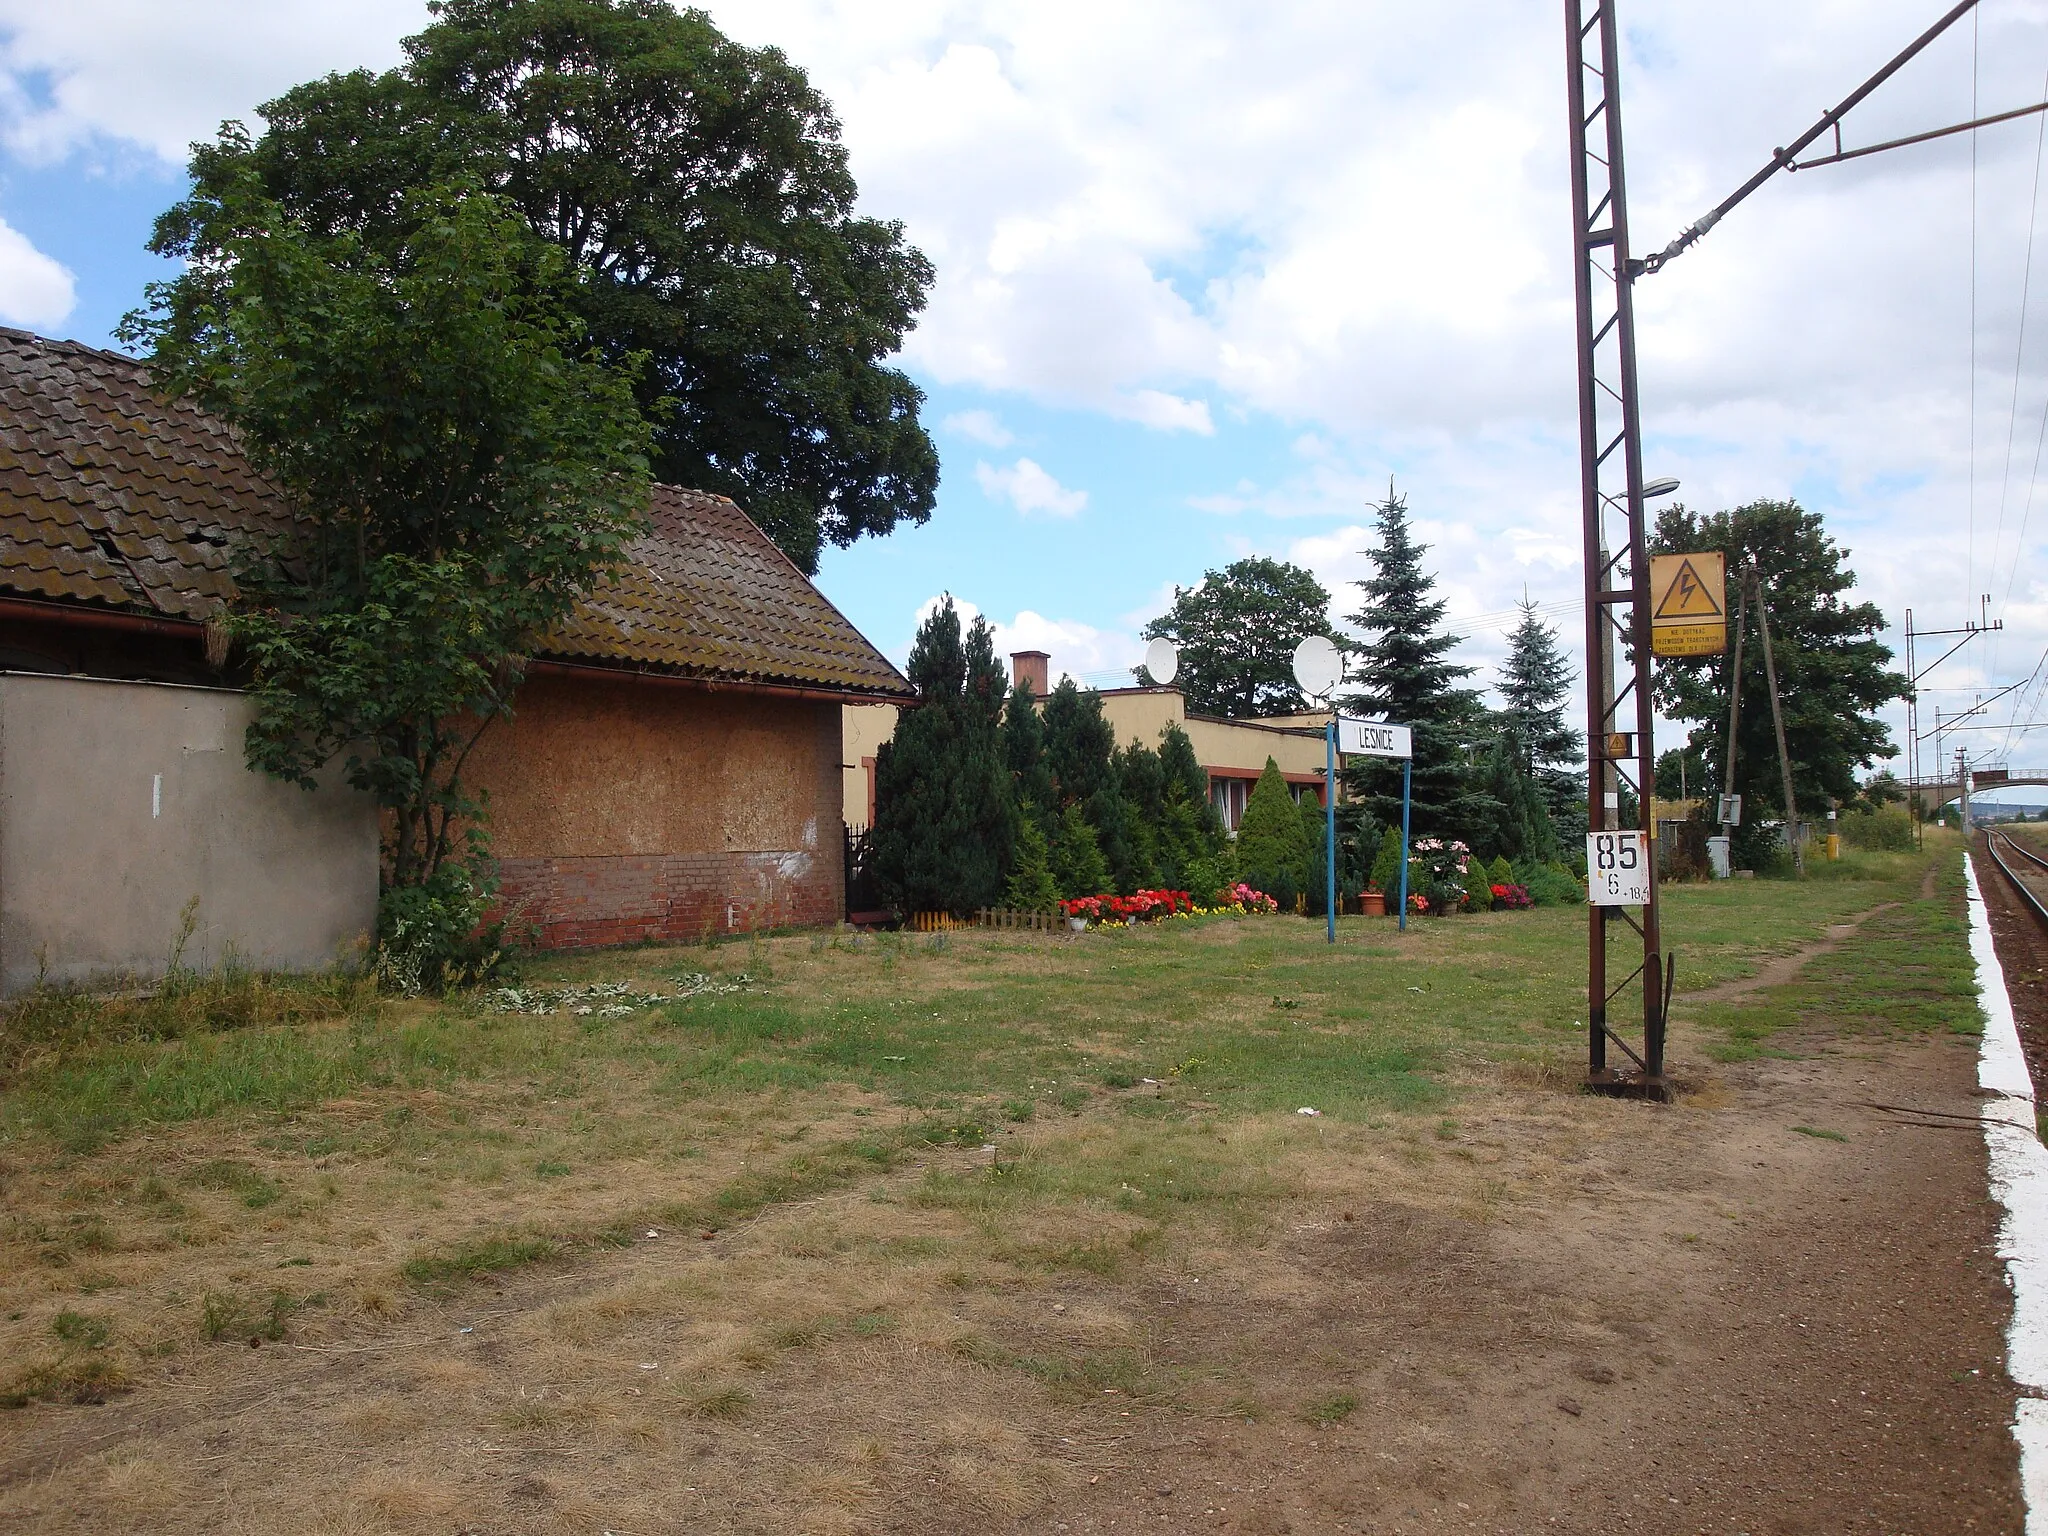 Photo showing: Leśnice-village near Lębork, Poland. Train station